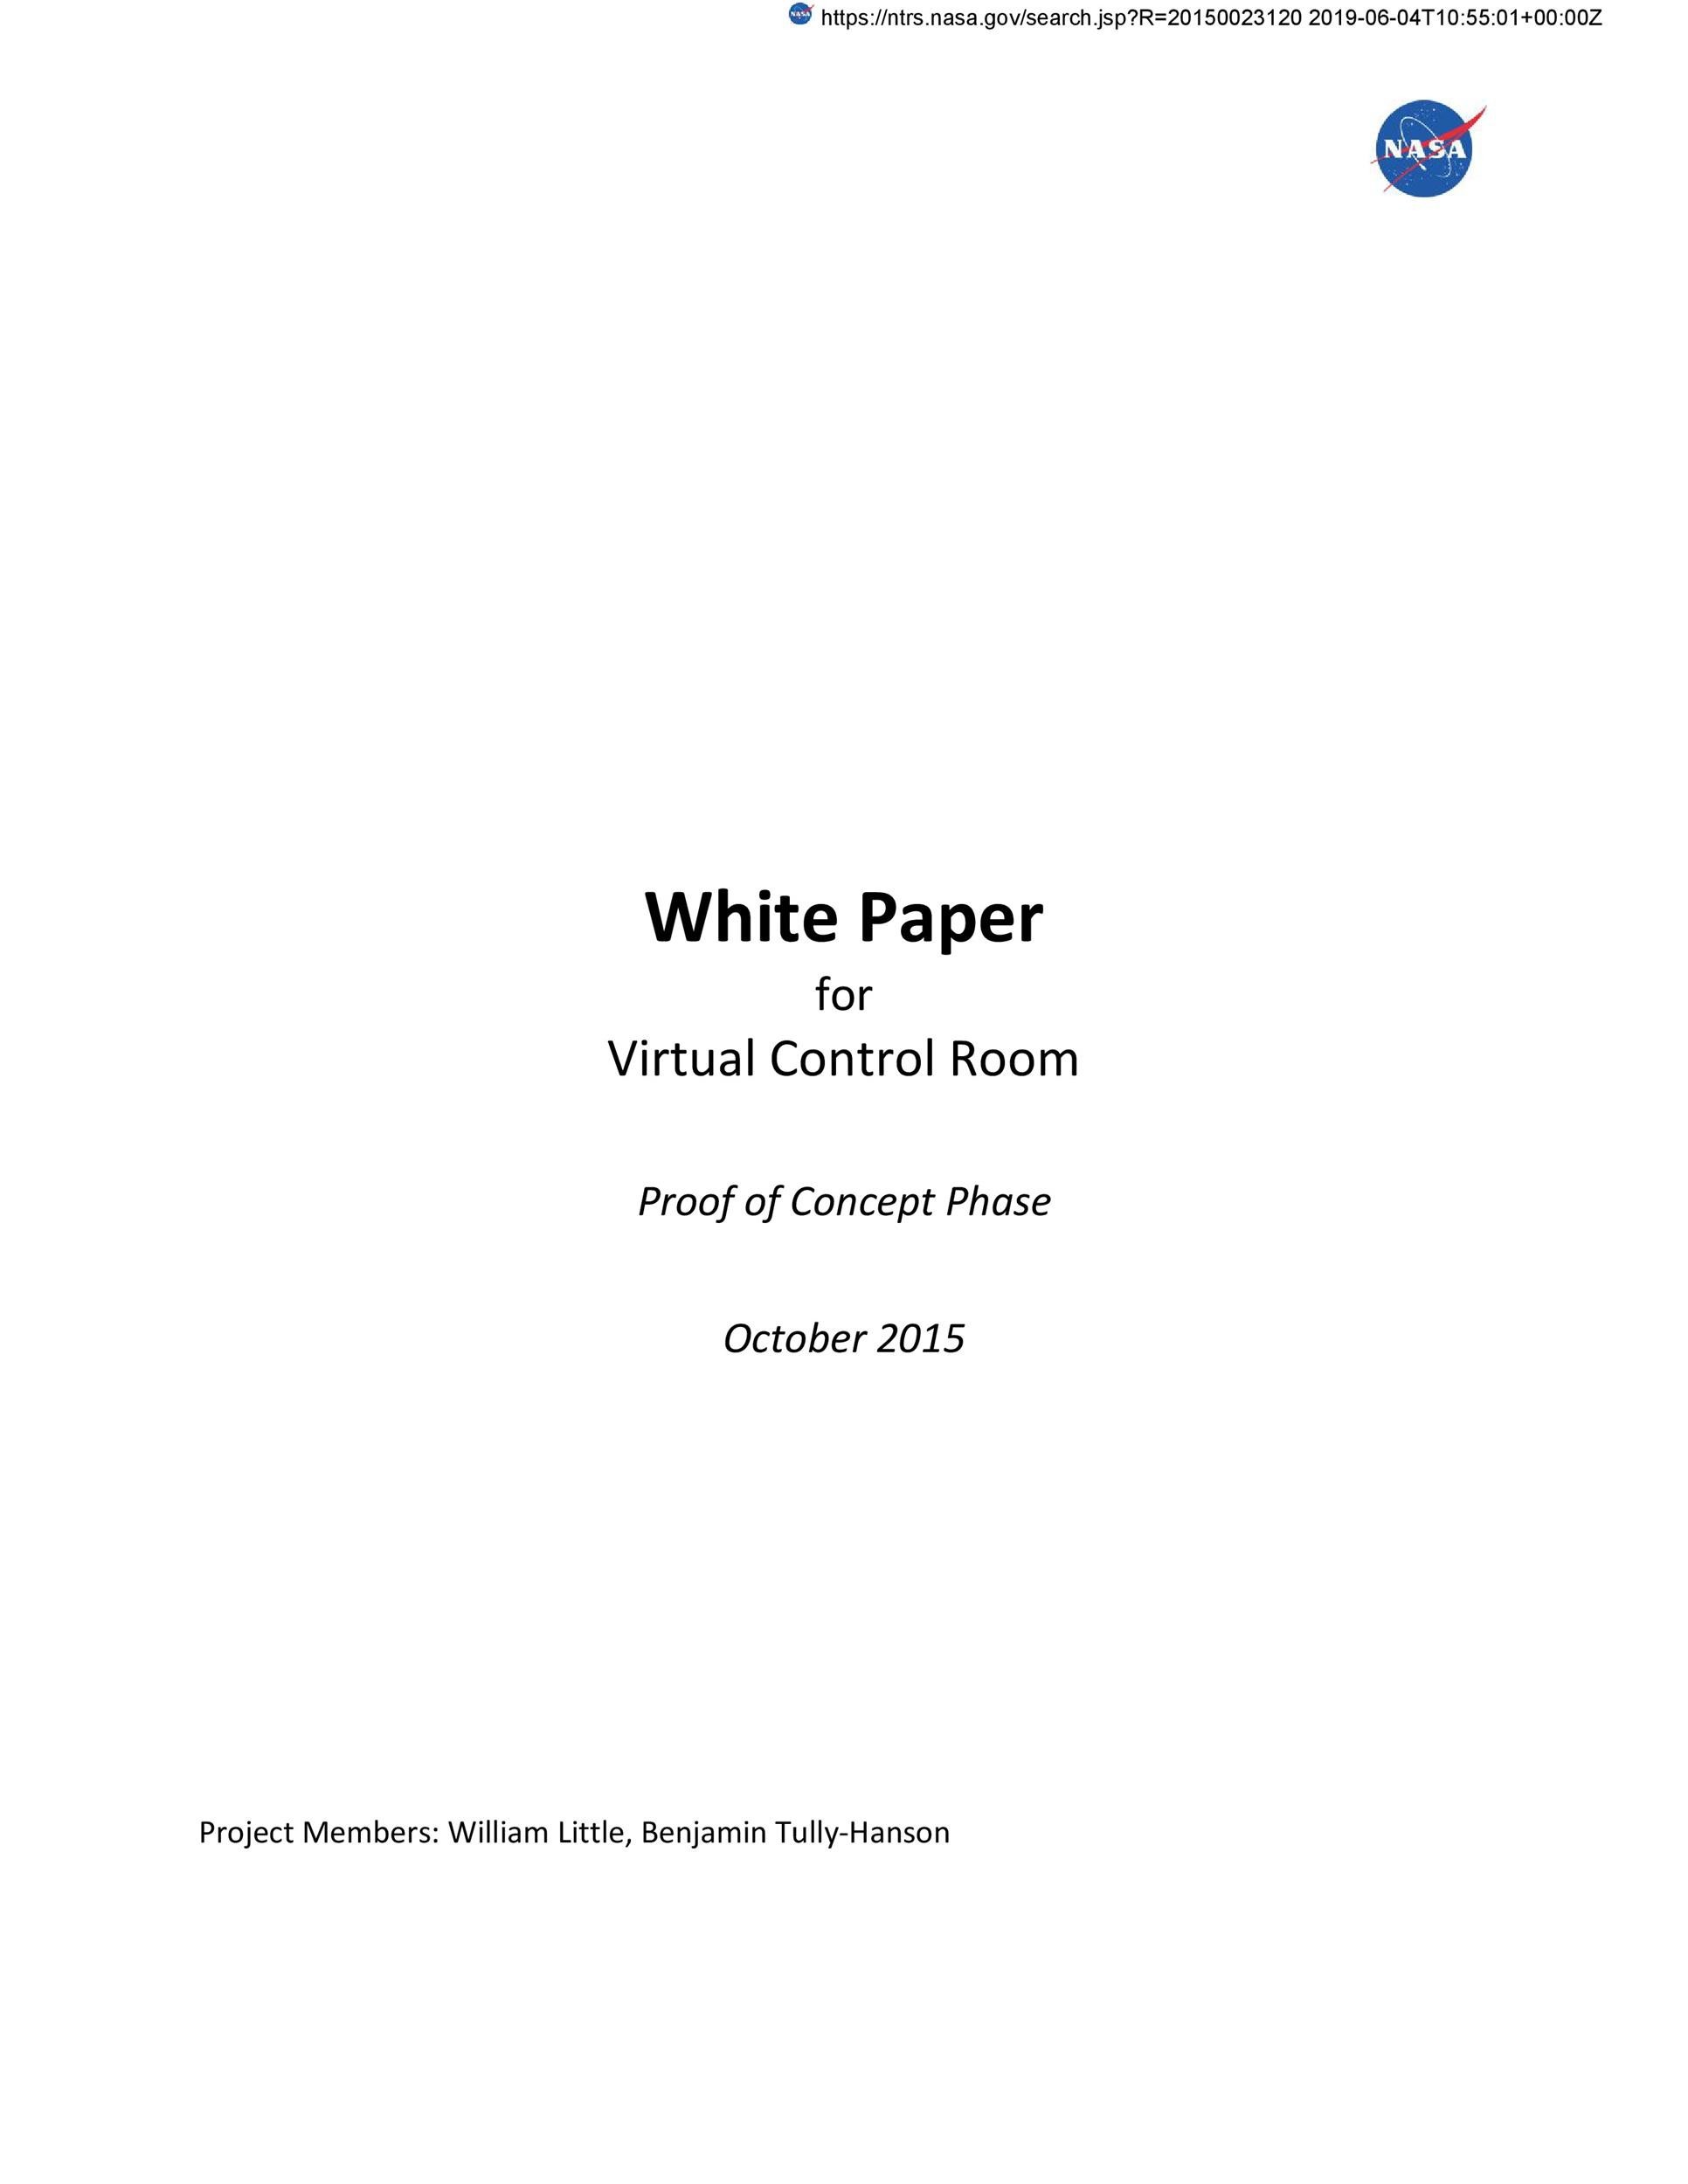 white paper presentation format